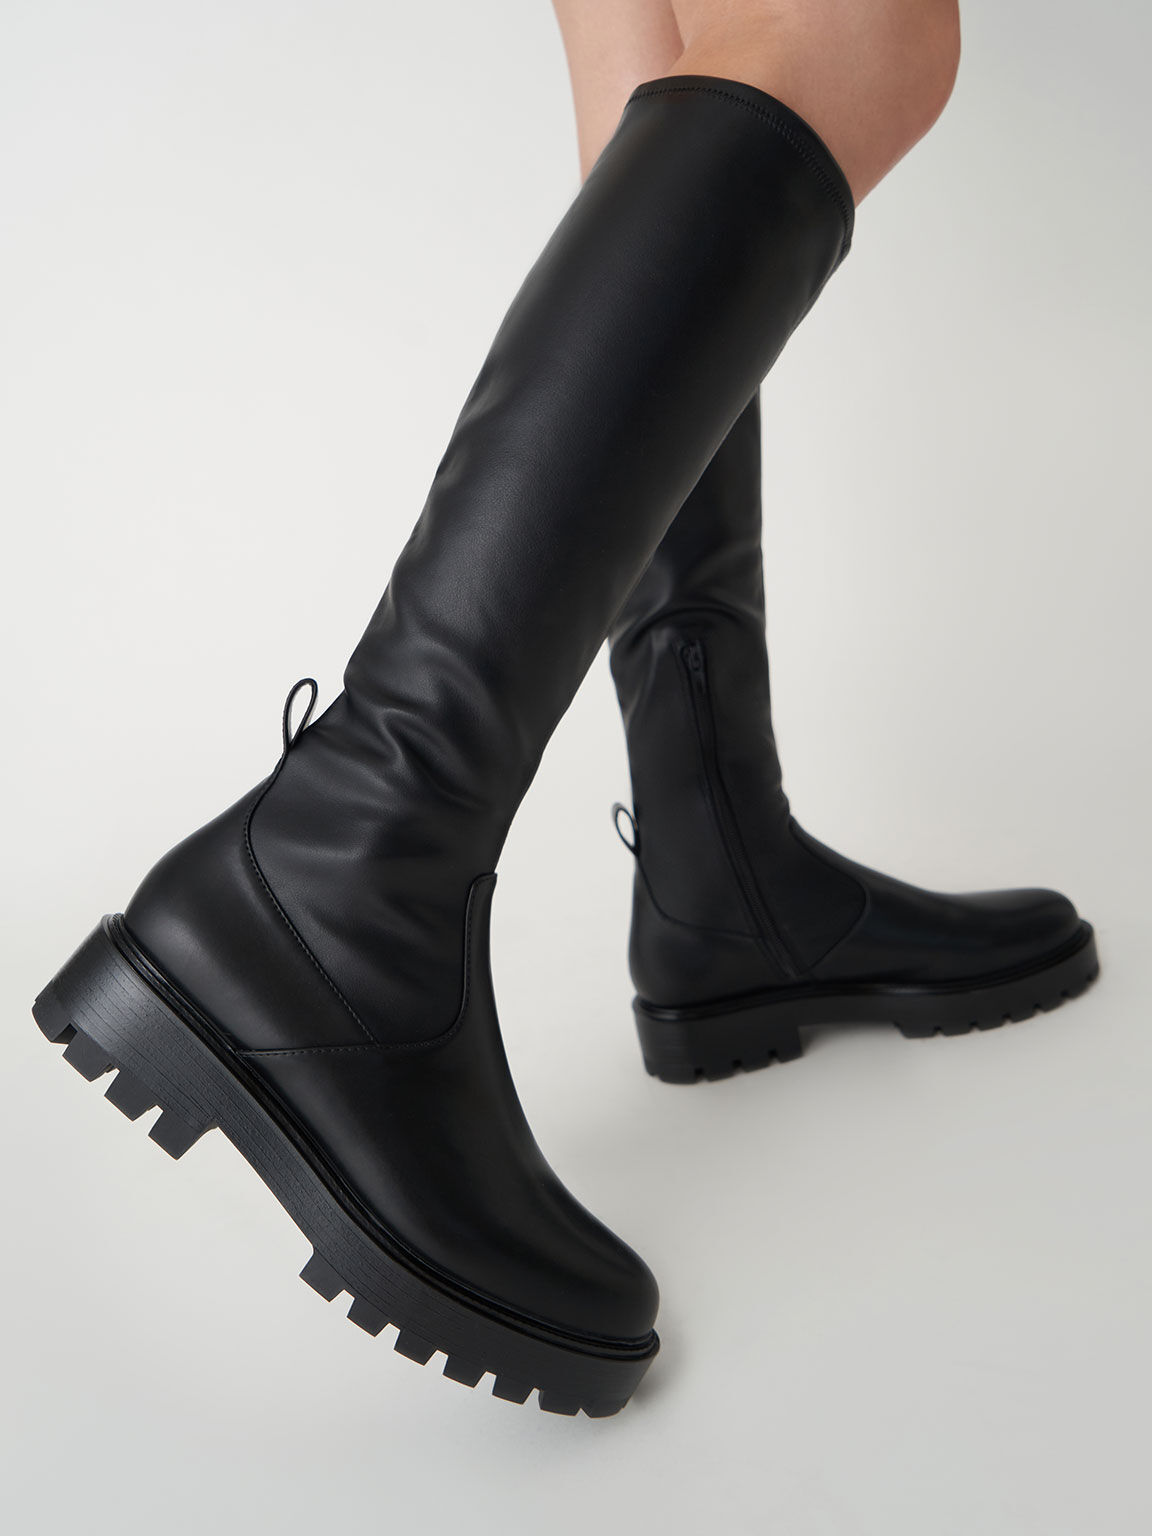 hoe vaak Verlenen Weven Black Knee-High Boots - CHARLES & KEITH US